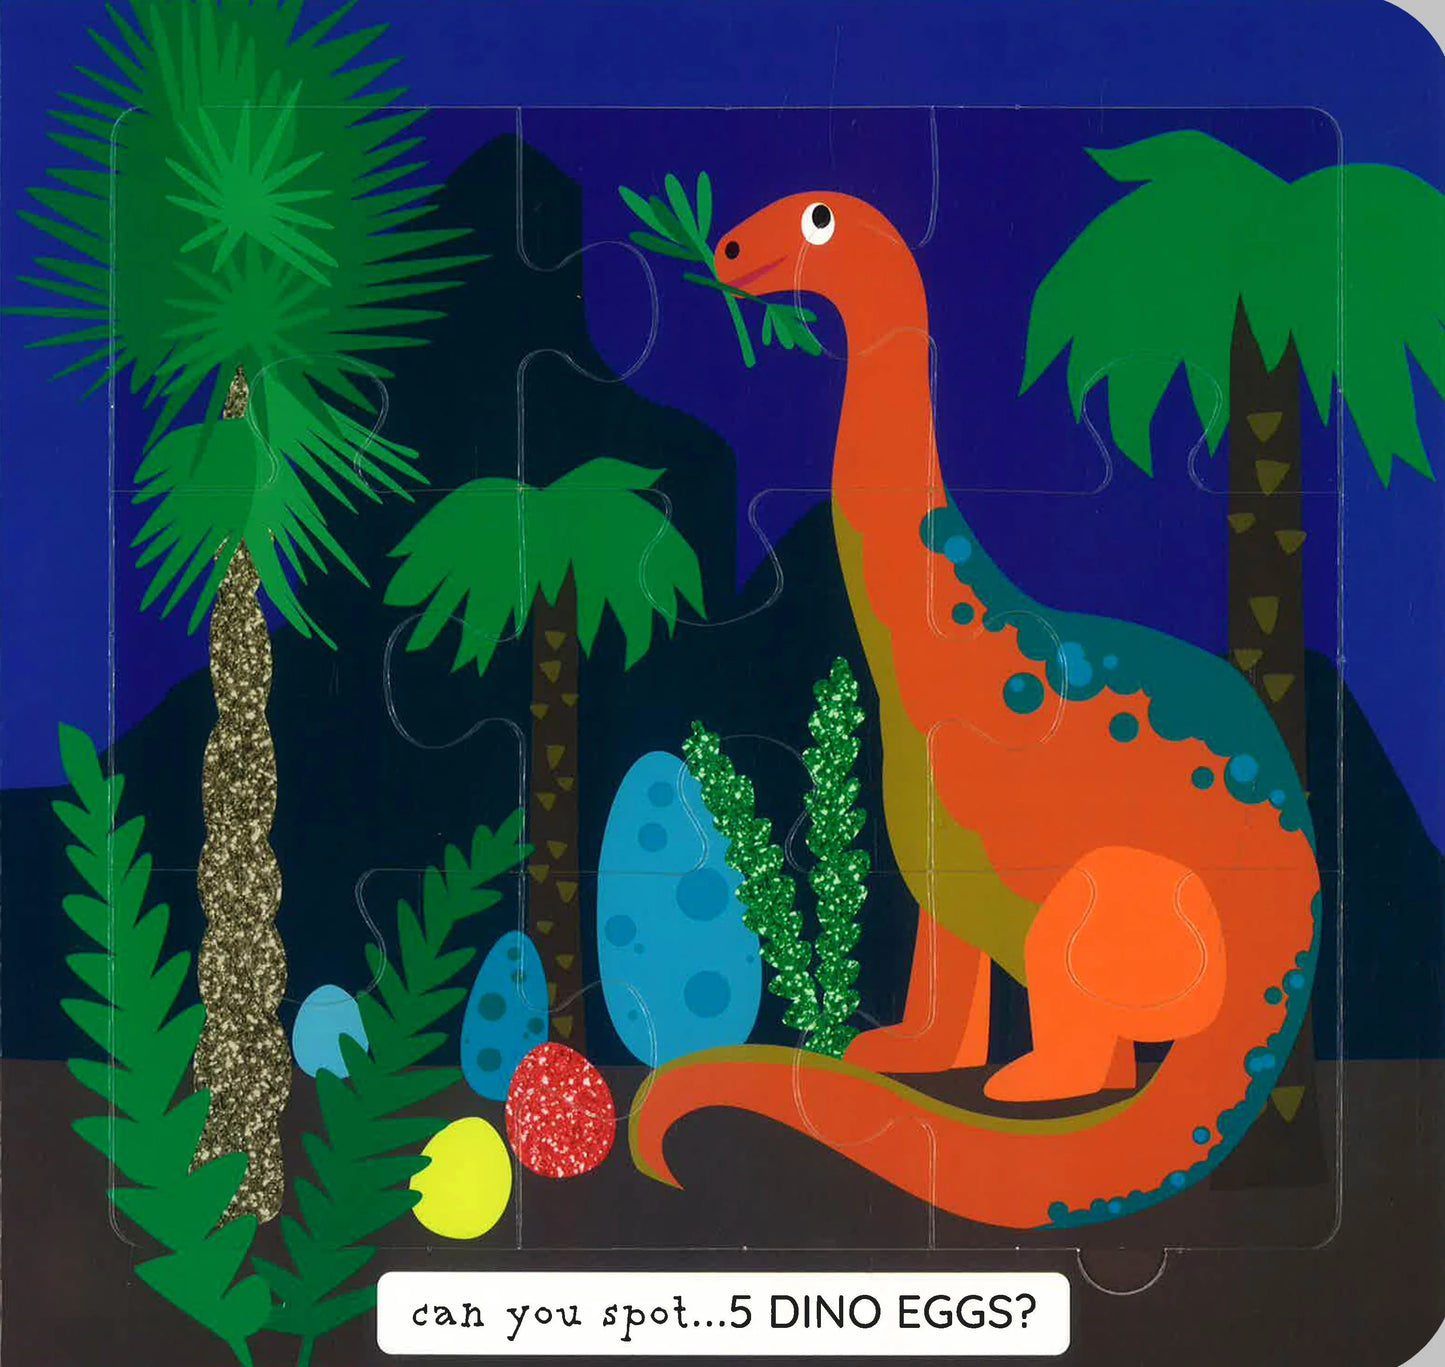 Dinousaurs Jigsaw Book - Board Book